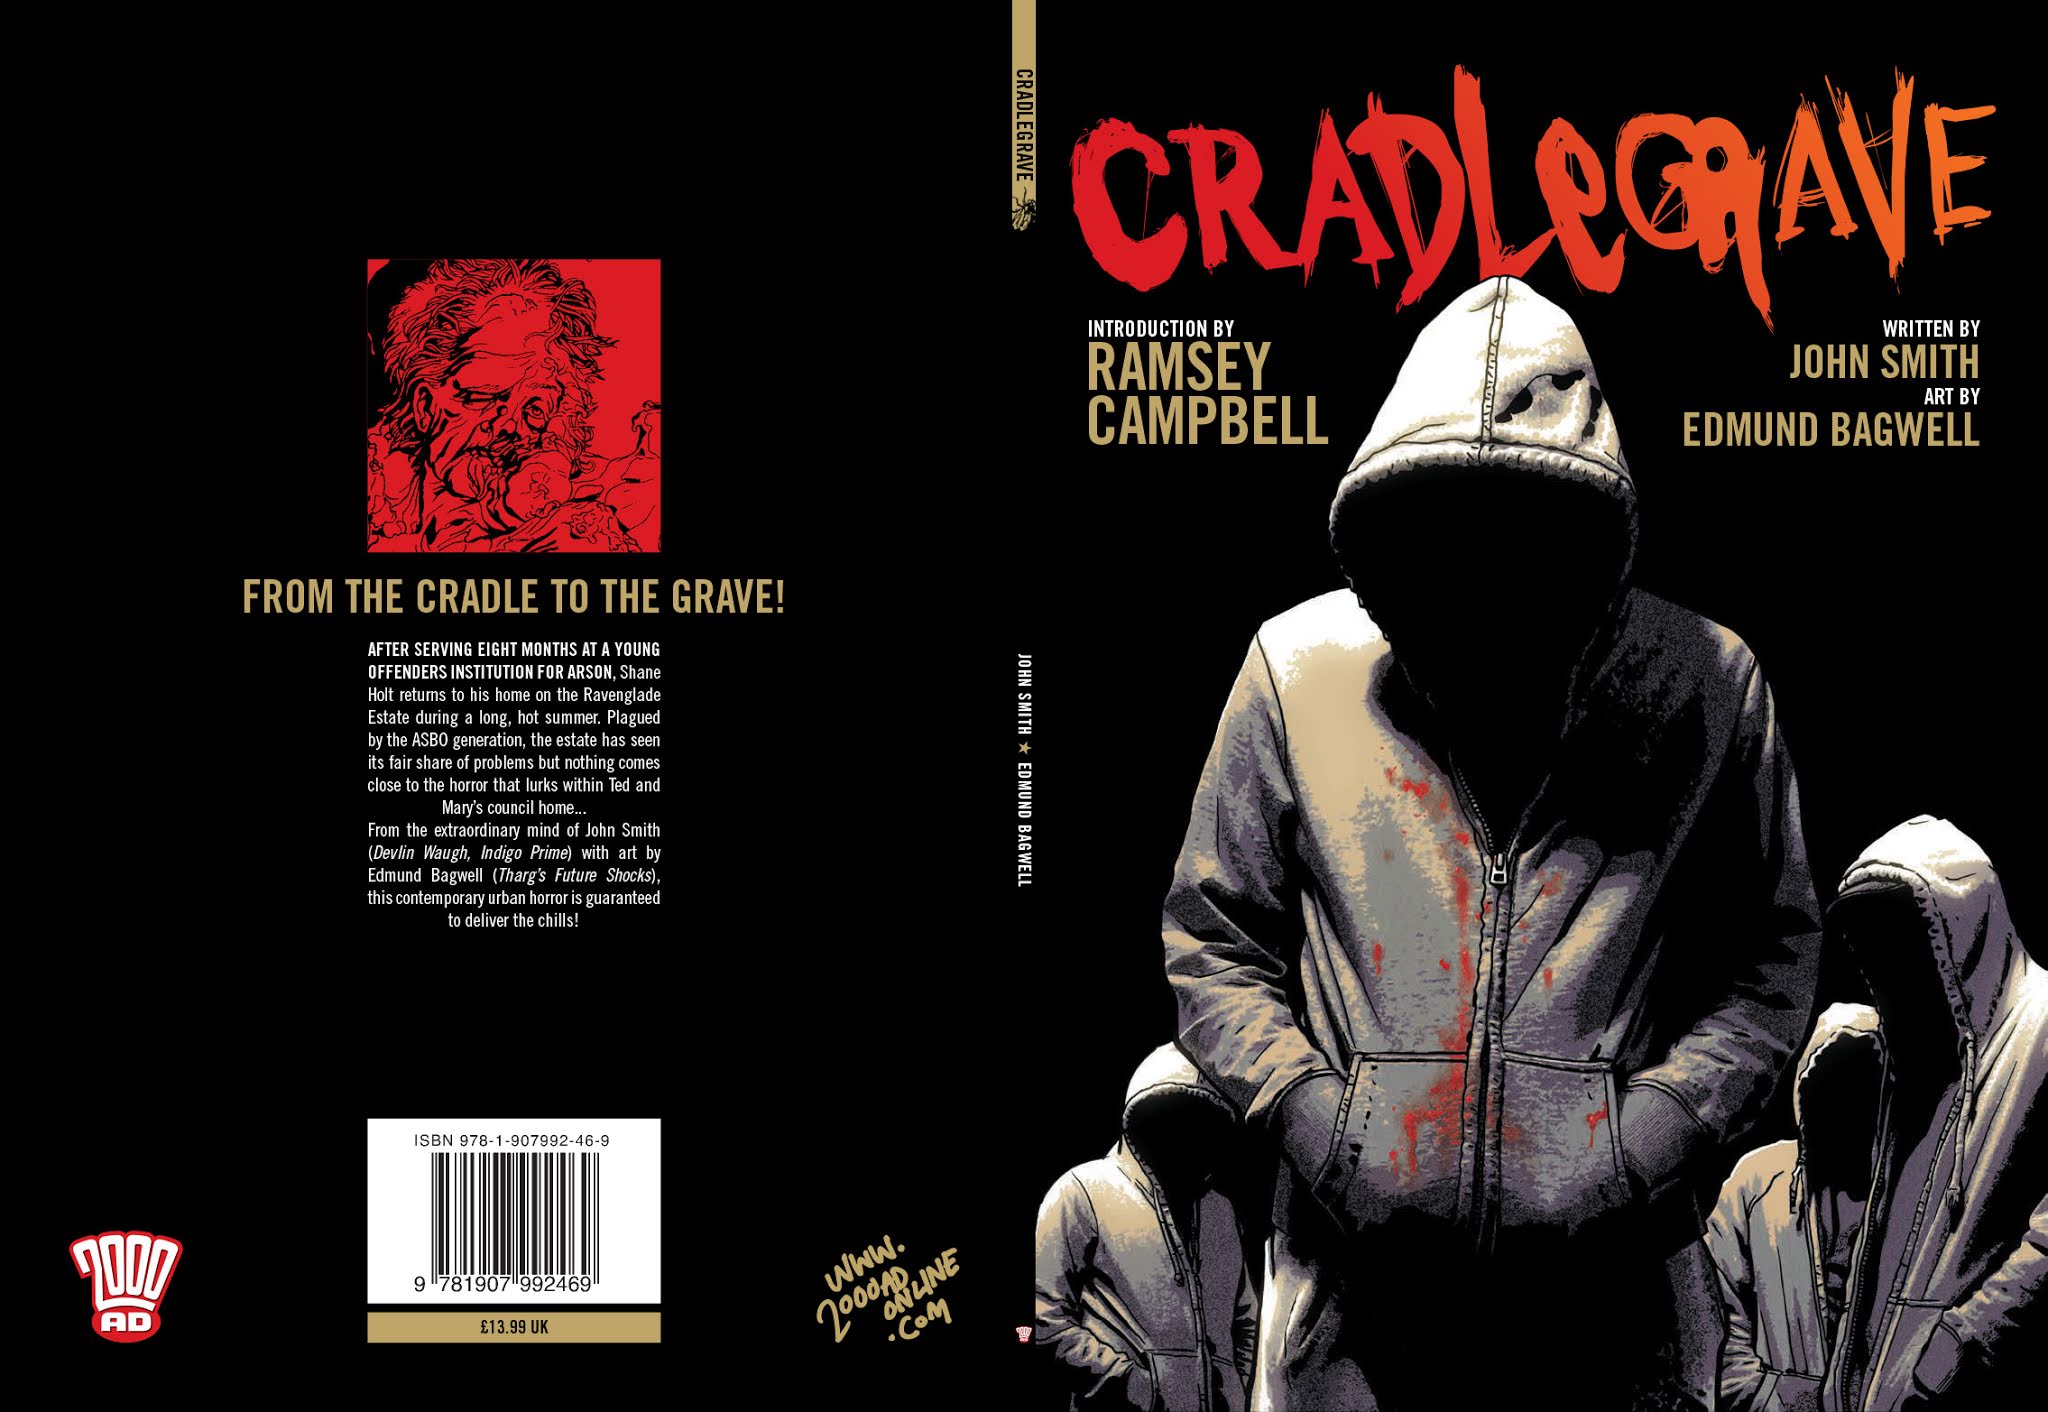 Read online Cradlegrave comic -  Issue # TPB - 1